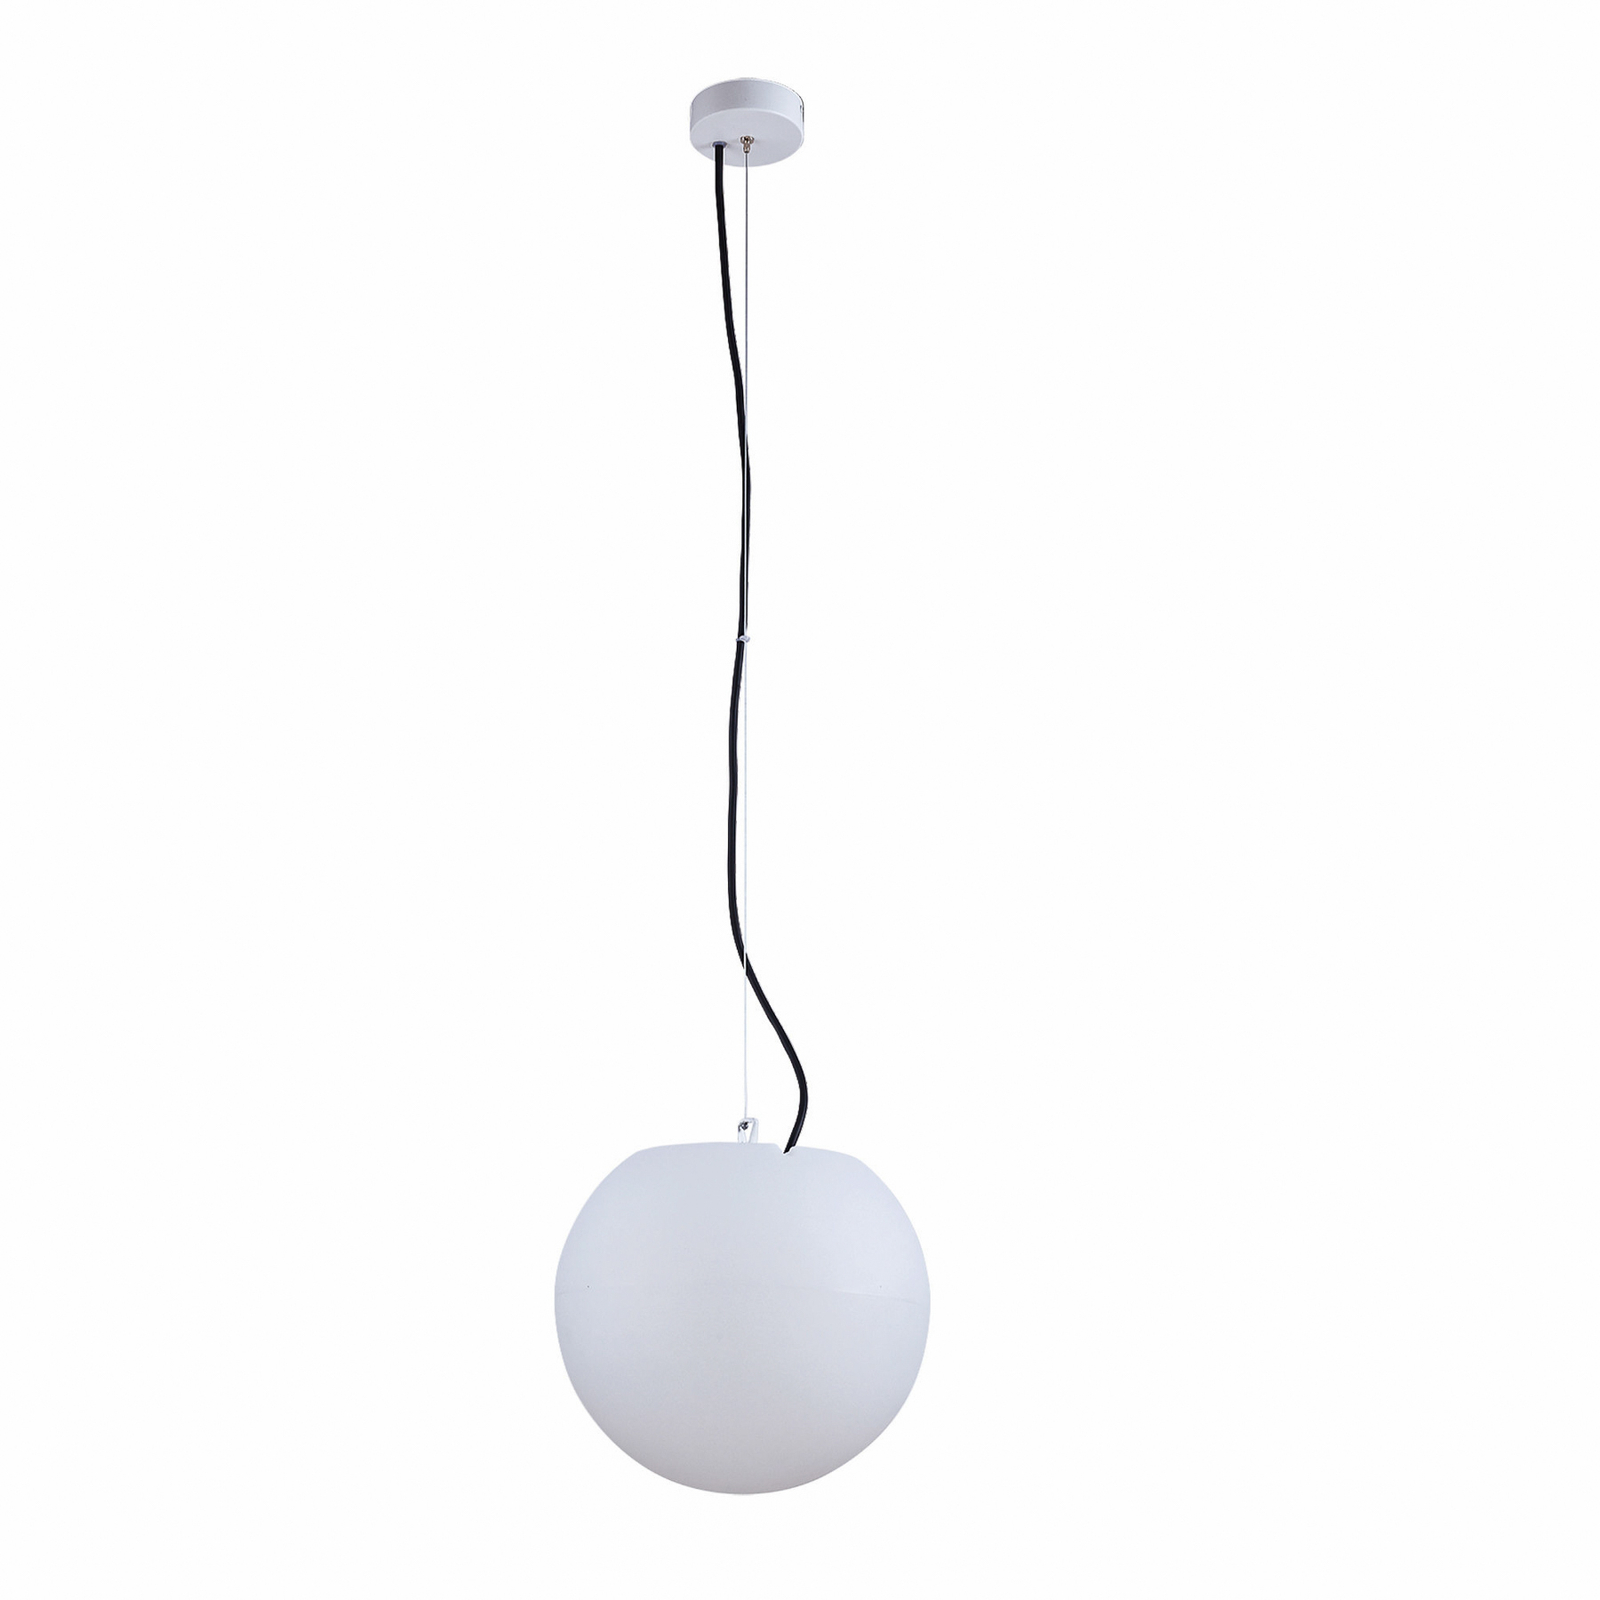 Cumulus pendant light for outdoor use, Ø 45 cm